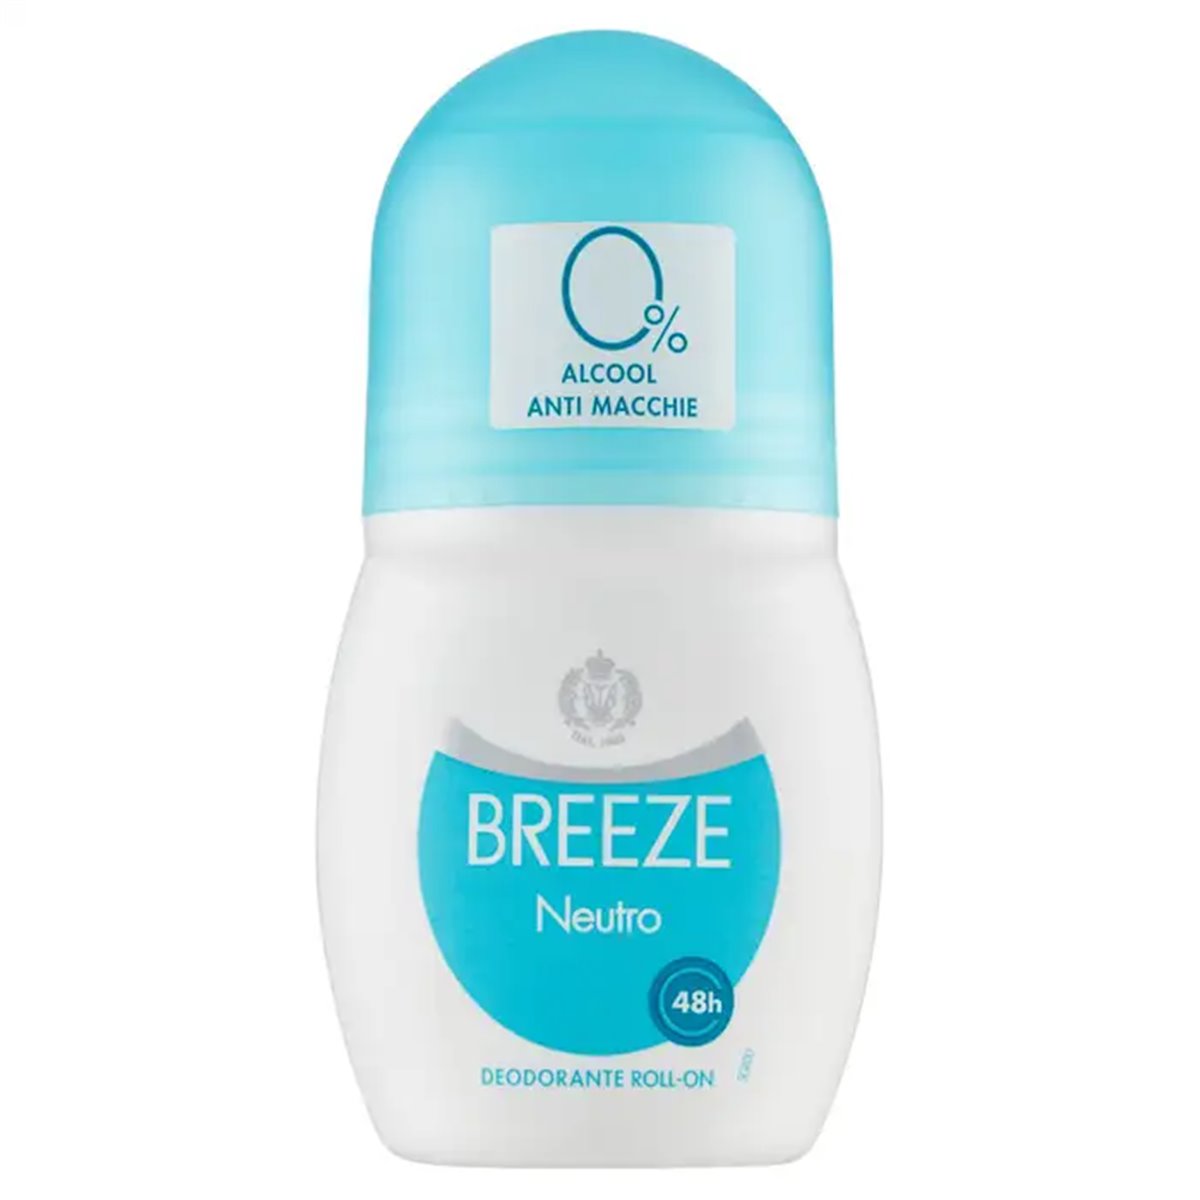 Breeze Deodorante roll on Neutro